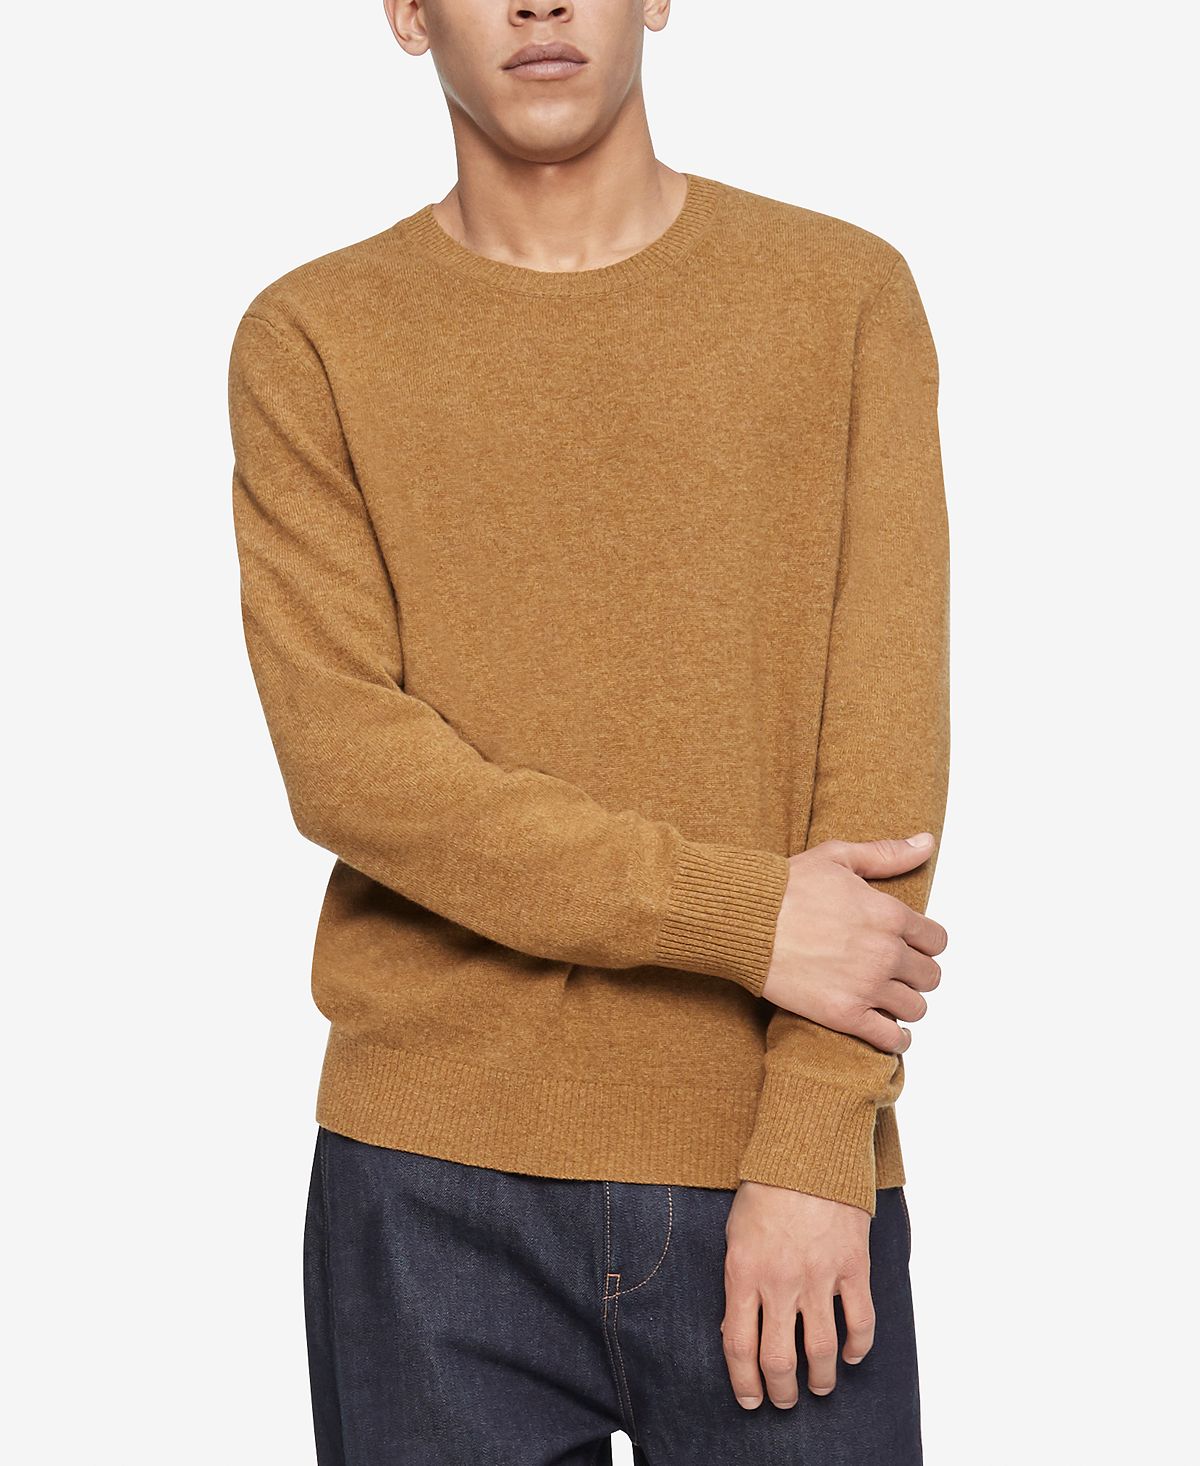 Lv Orange Sweater Top Sellers, SAVE 58% 